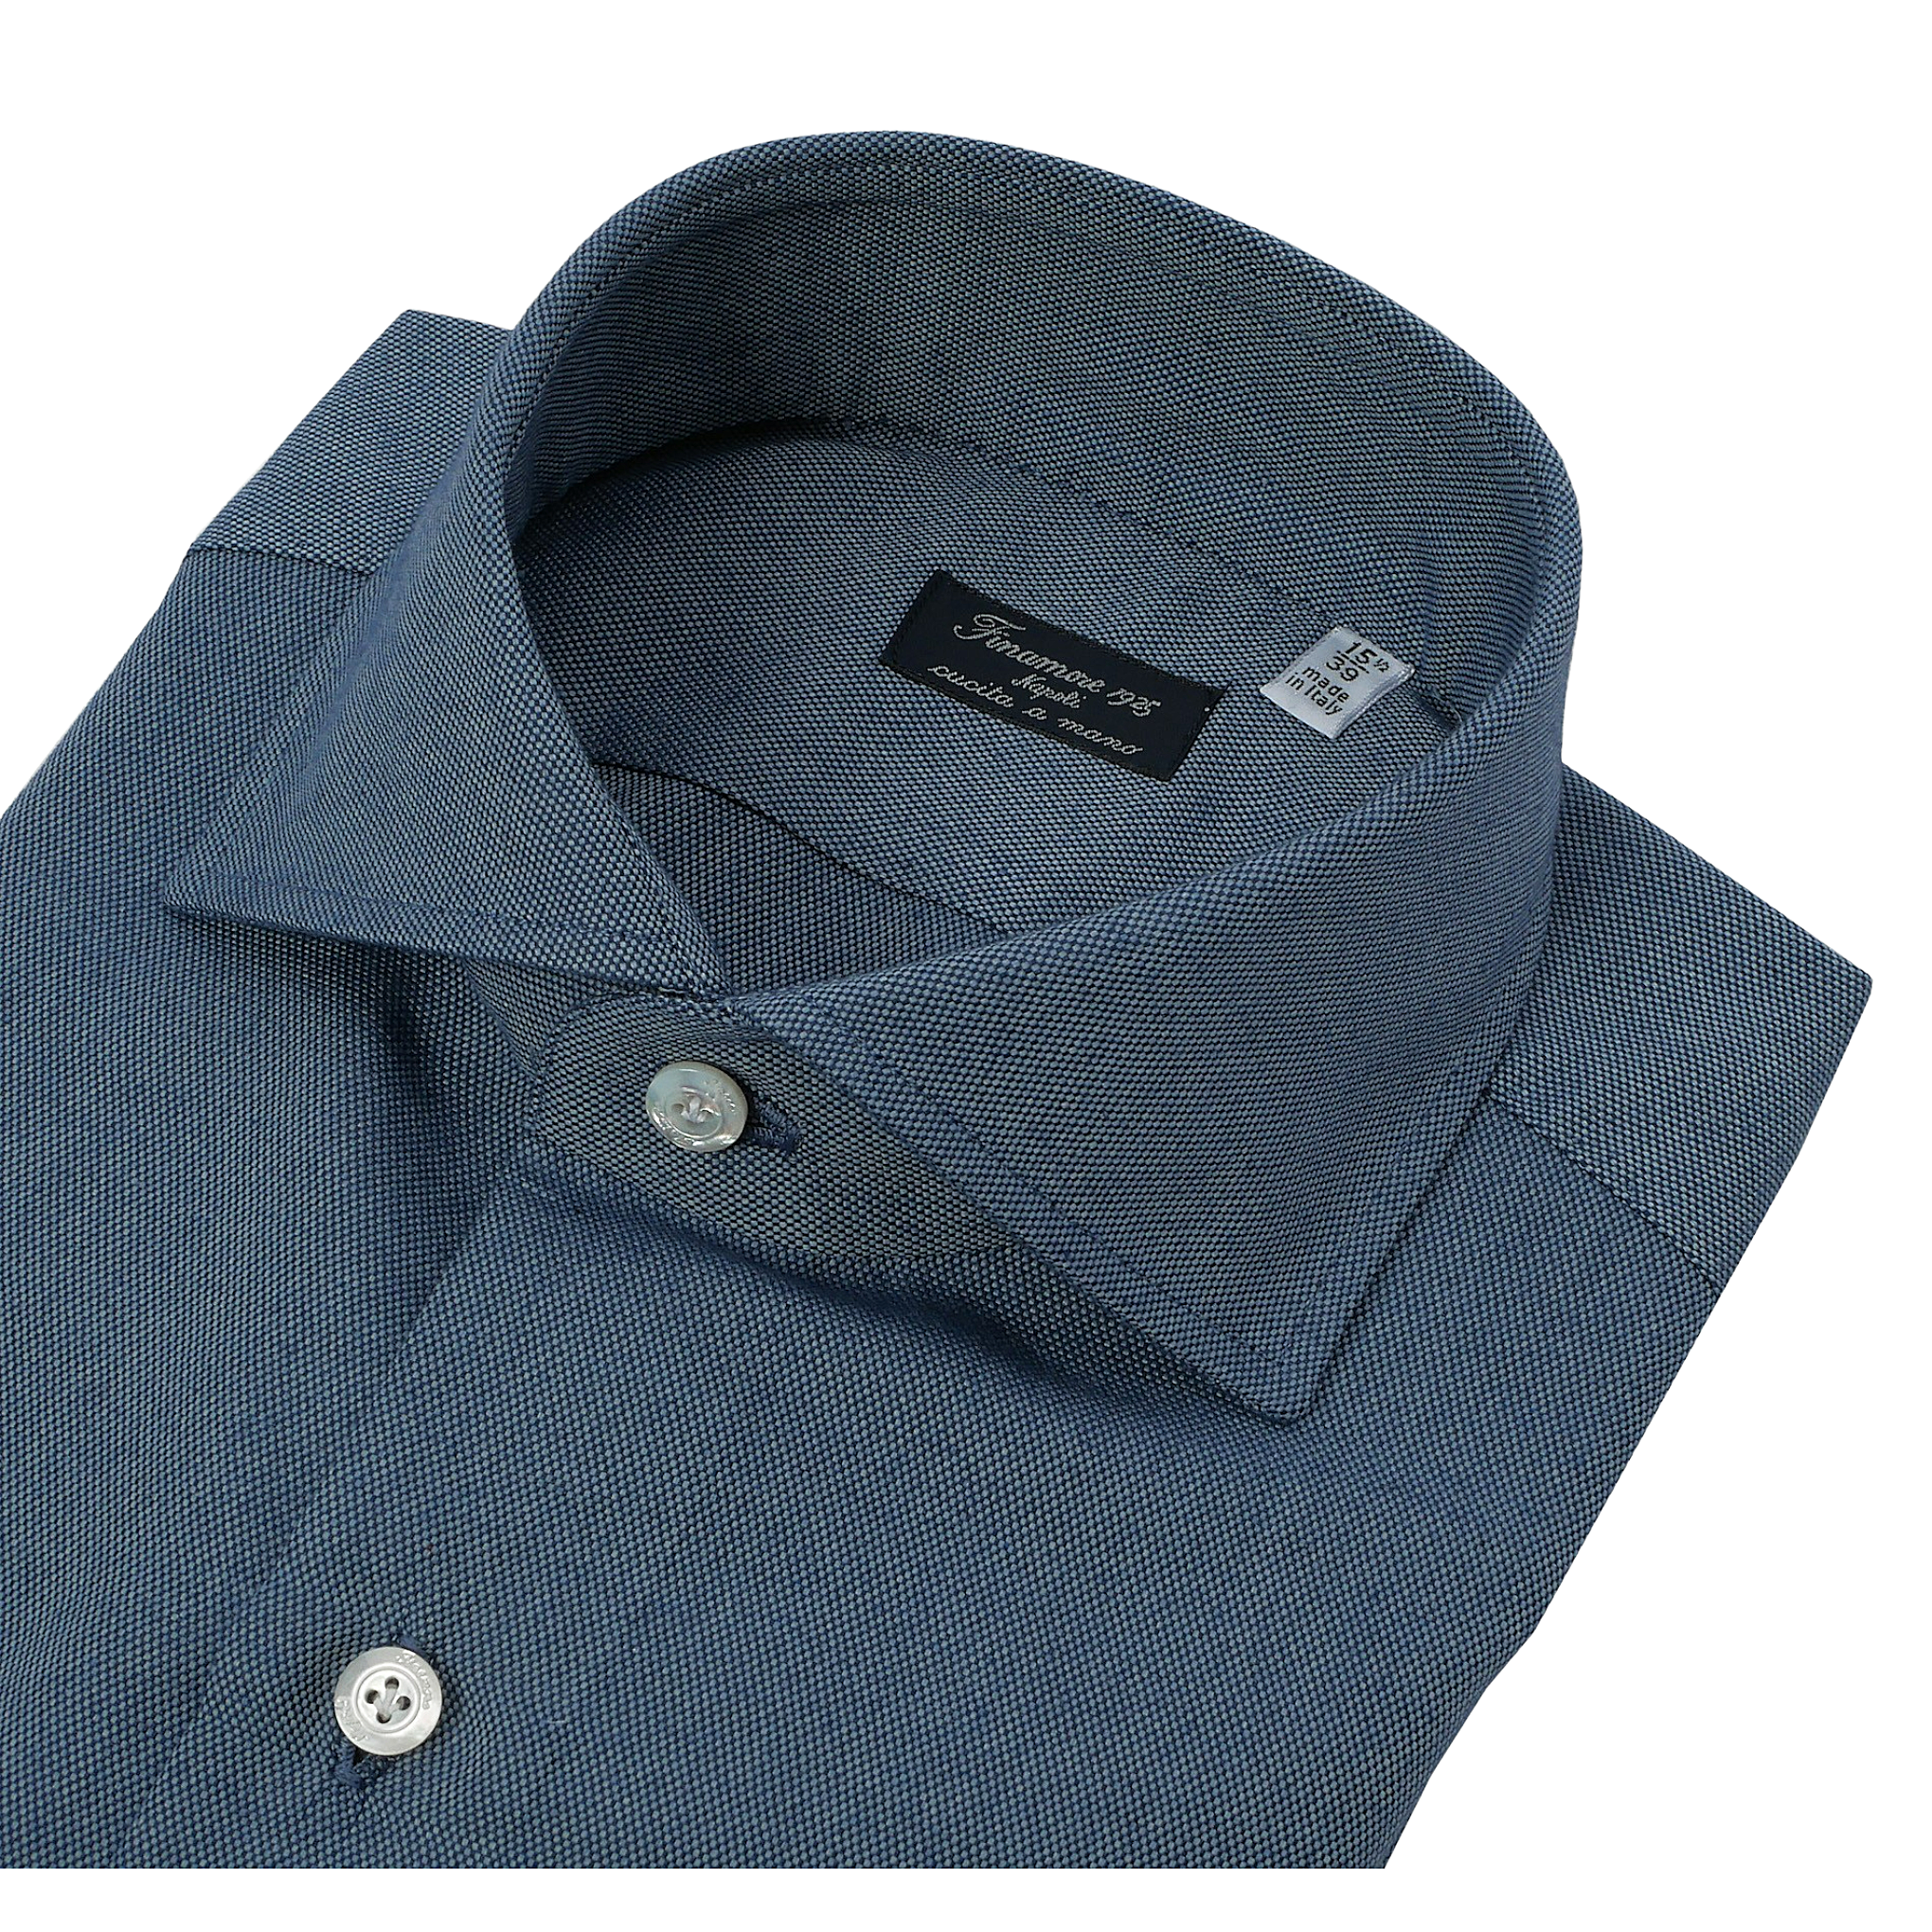 Napoli regular fit shirt plain fabric blue cotton and cashmere